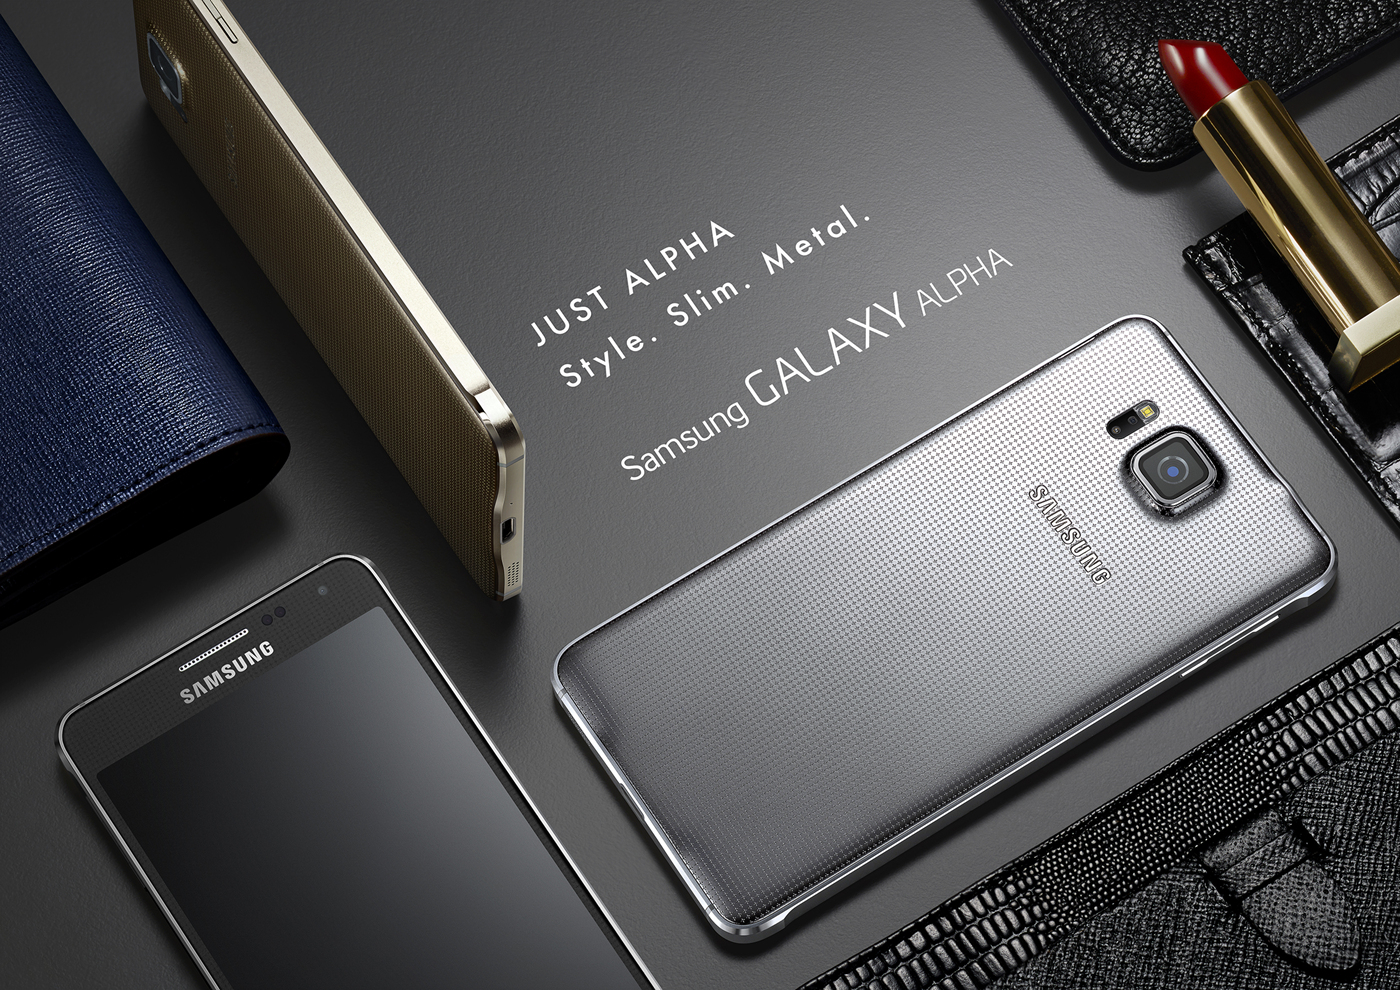 Samsung Galaxy Alpha สมาร์ทโฟนดีไซน์หรูพร้อมท้าชน iPhone 6 ต้นก.ย.นี้